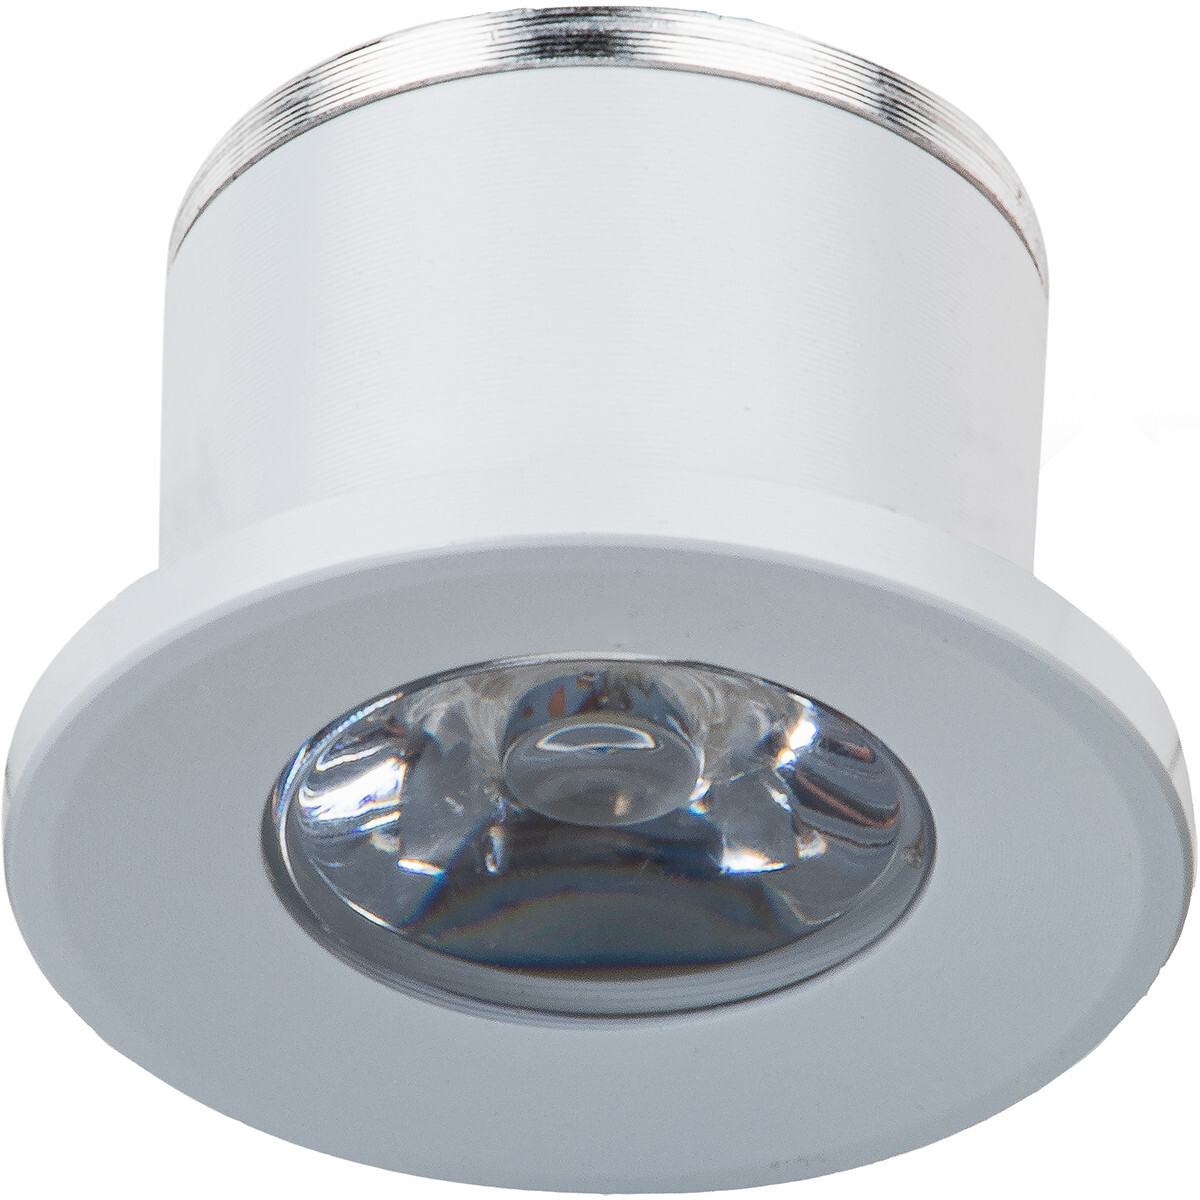 Velvalux LED Veranda Spot Verlichting - 1W - Warm Wit 3000K - Inbouw - Dimbaar - Rond - Mat Wit - Aluminium - Ø31mm